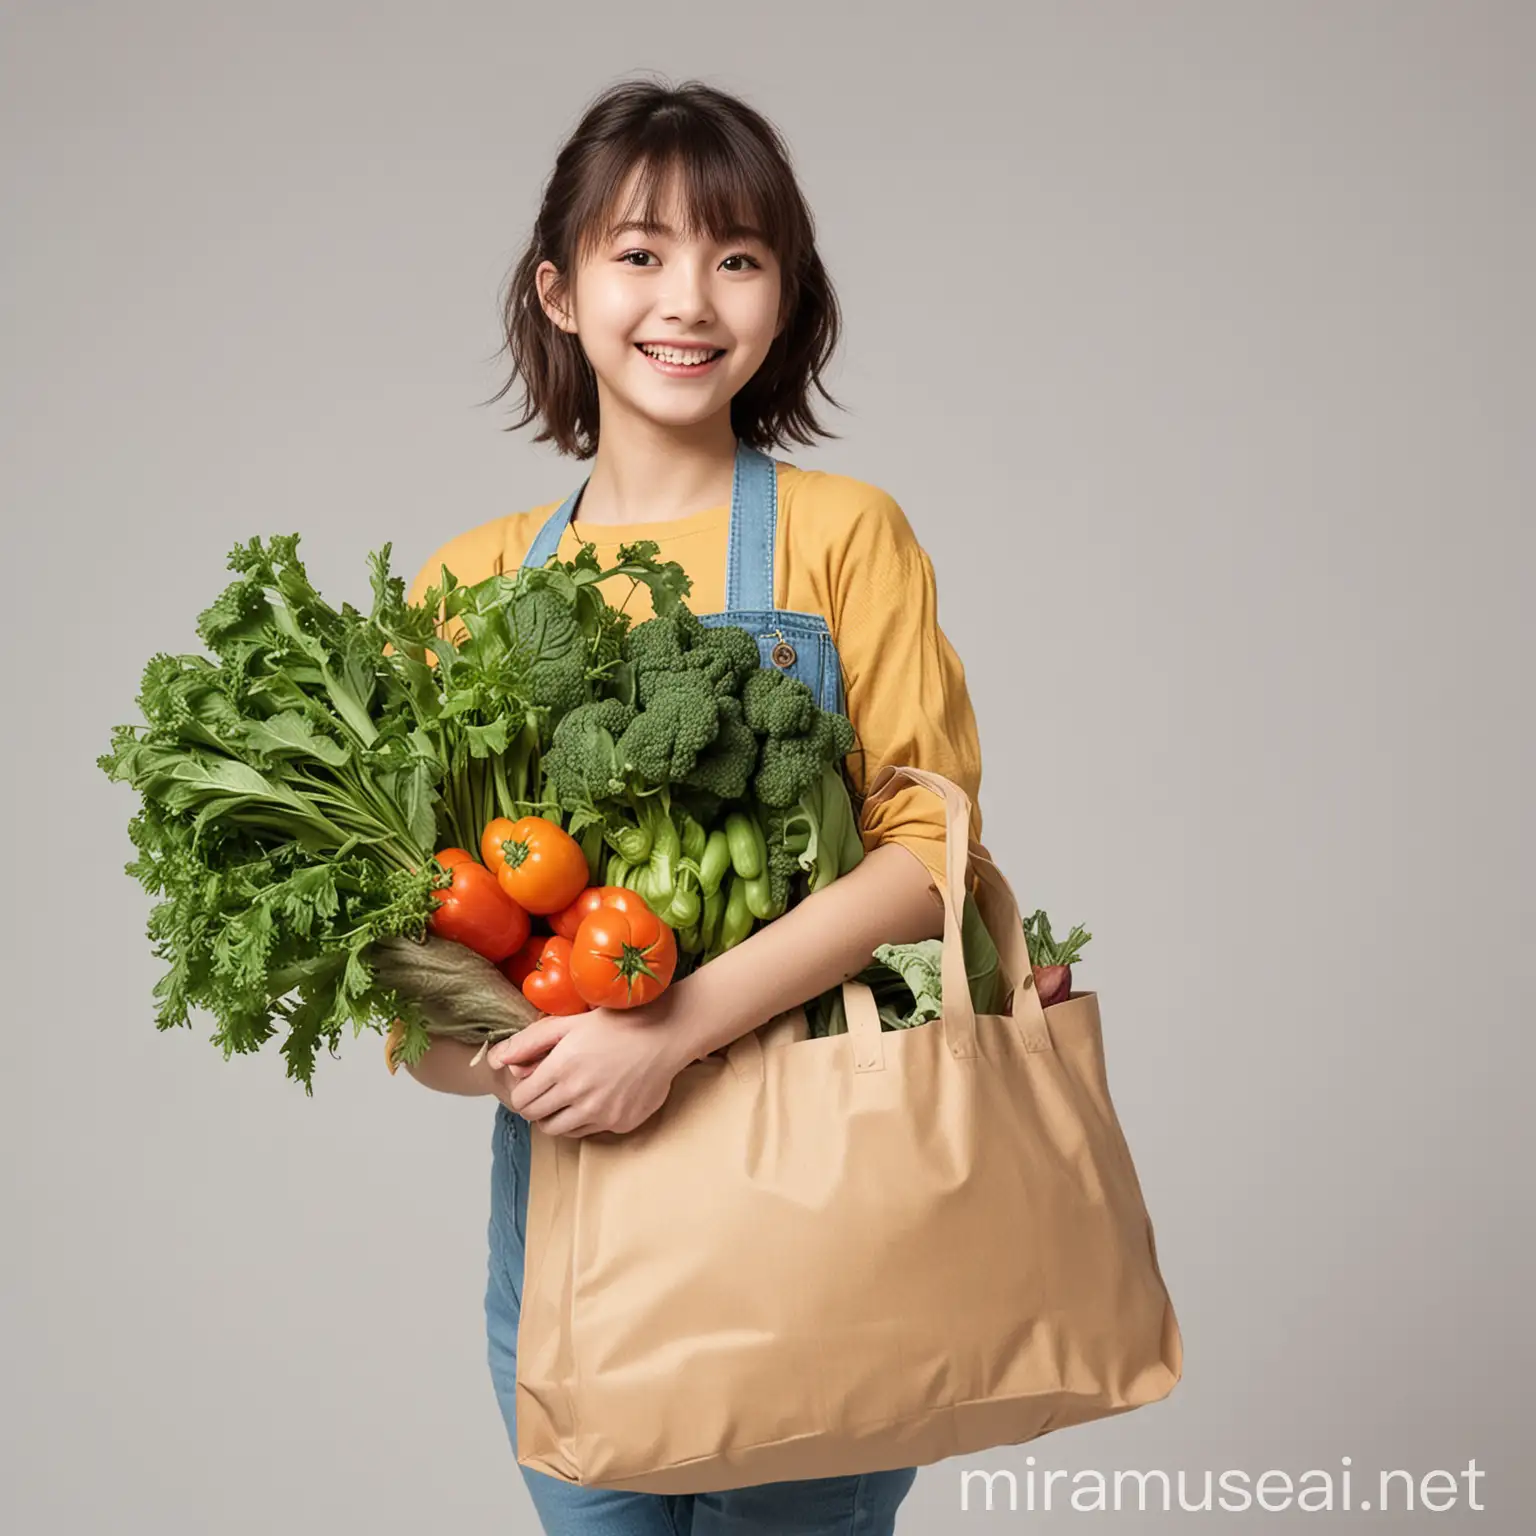 Cheerful Anime Girl Carrying Vegetables Bag in Studio